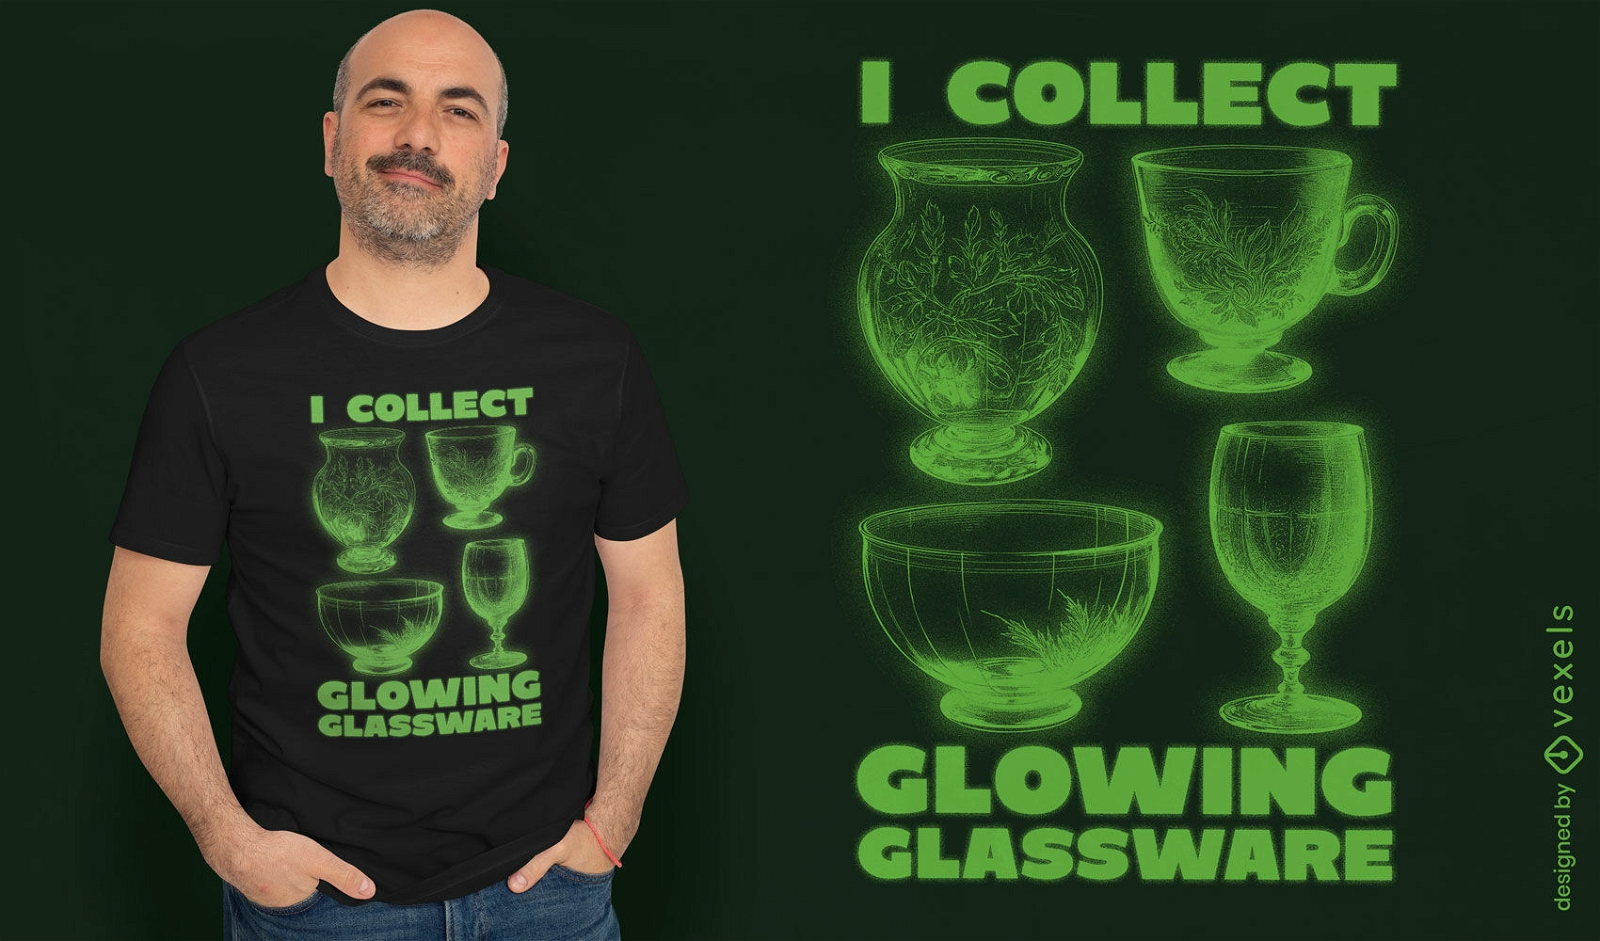 Glowing glassware t-shirt design